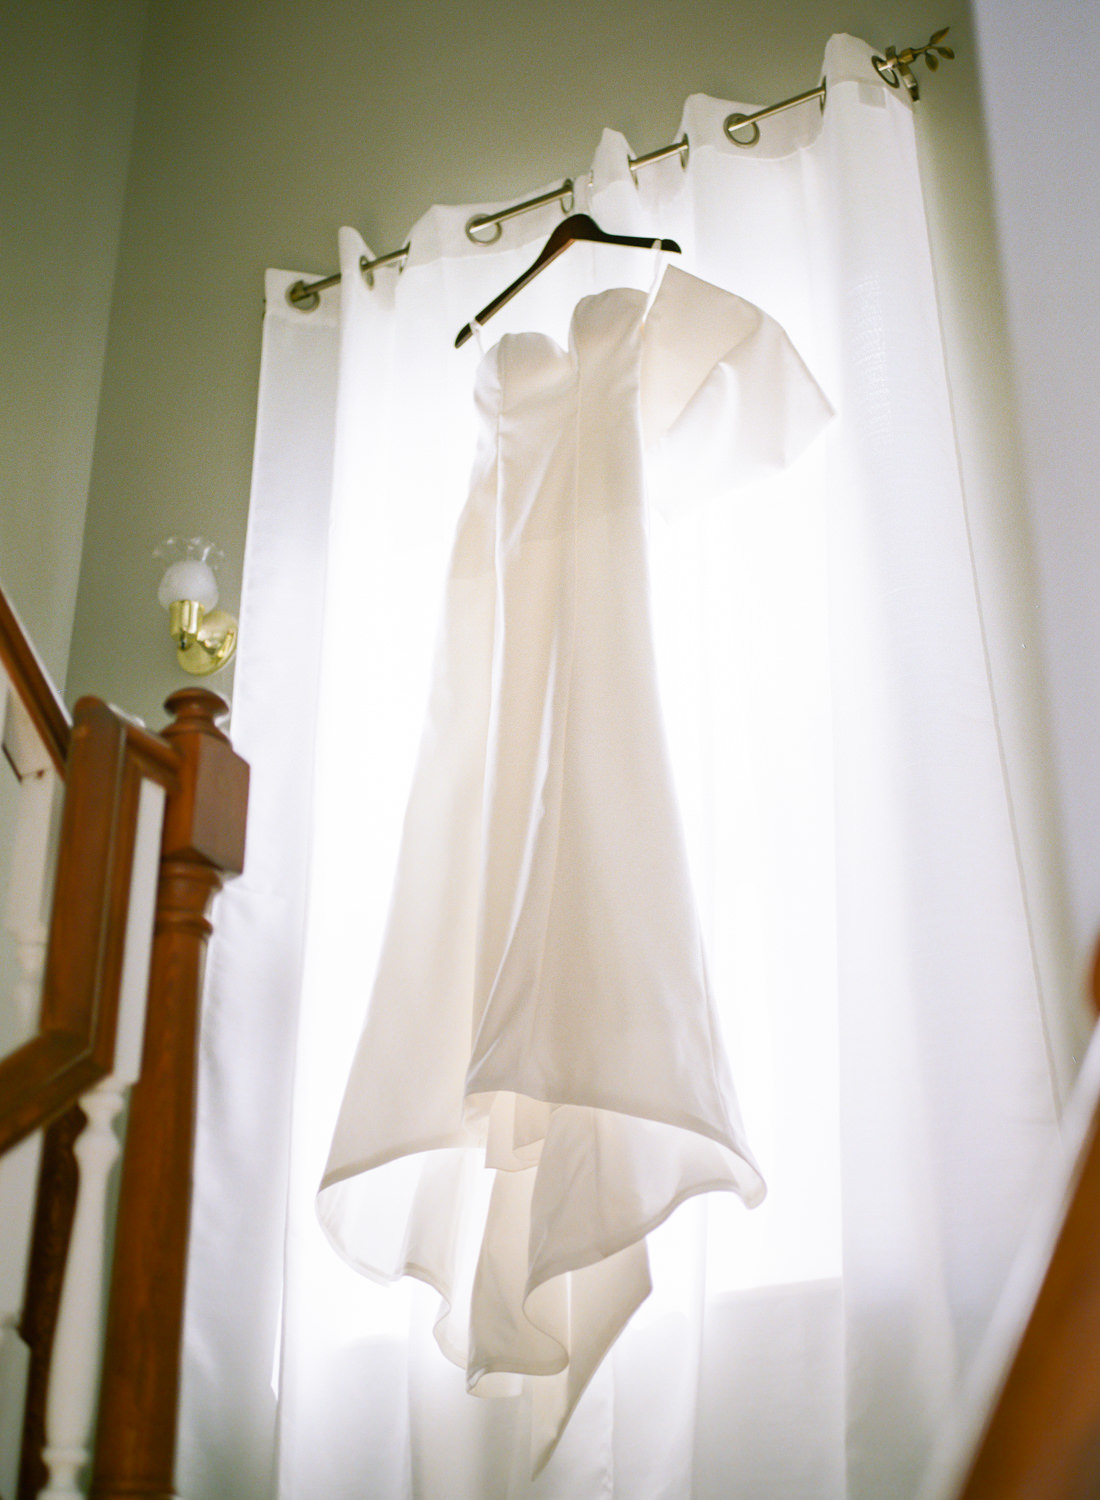 Wedding dress in window; St. Louis wedding photographer